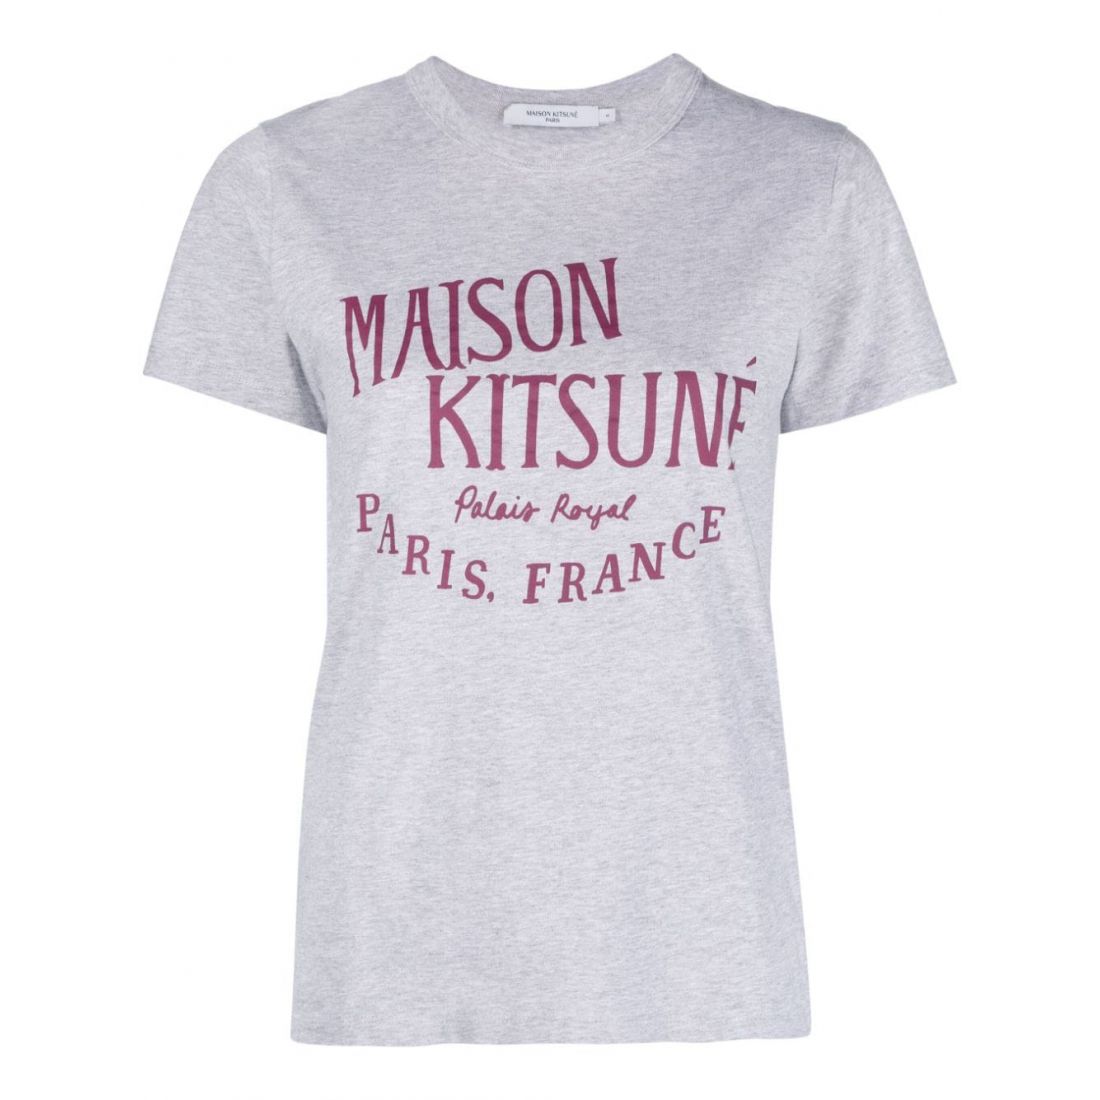 Maison Kitsuné - T-shirt 'Logo' pour Femmes